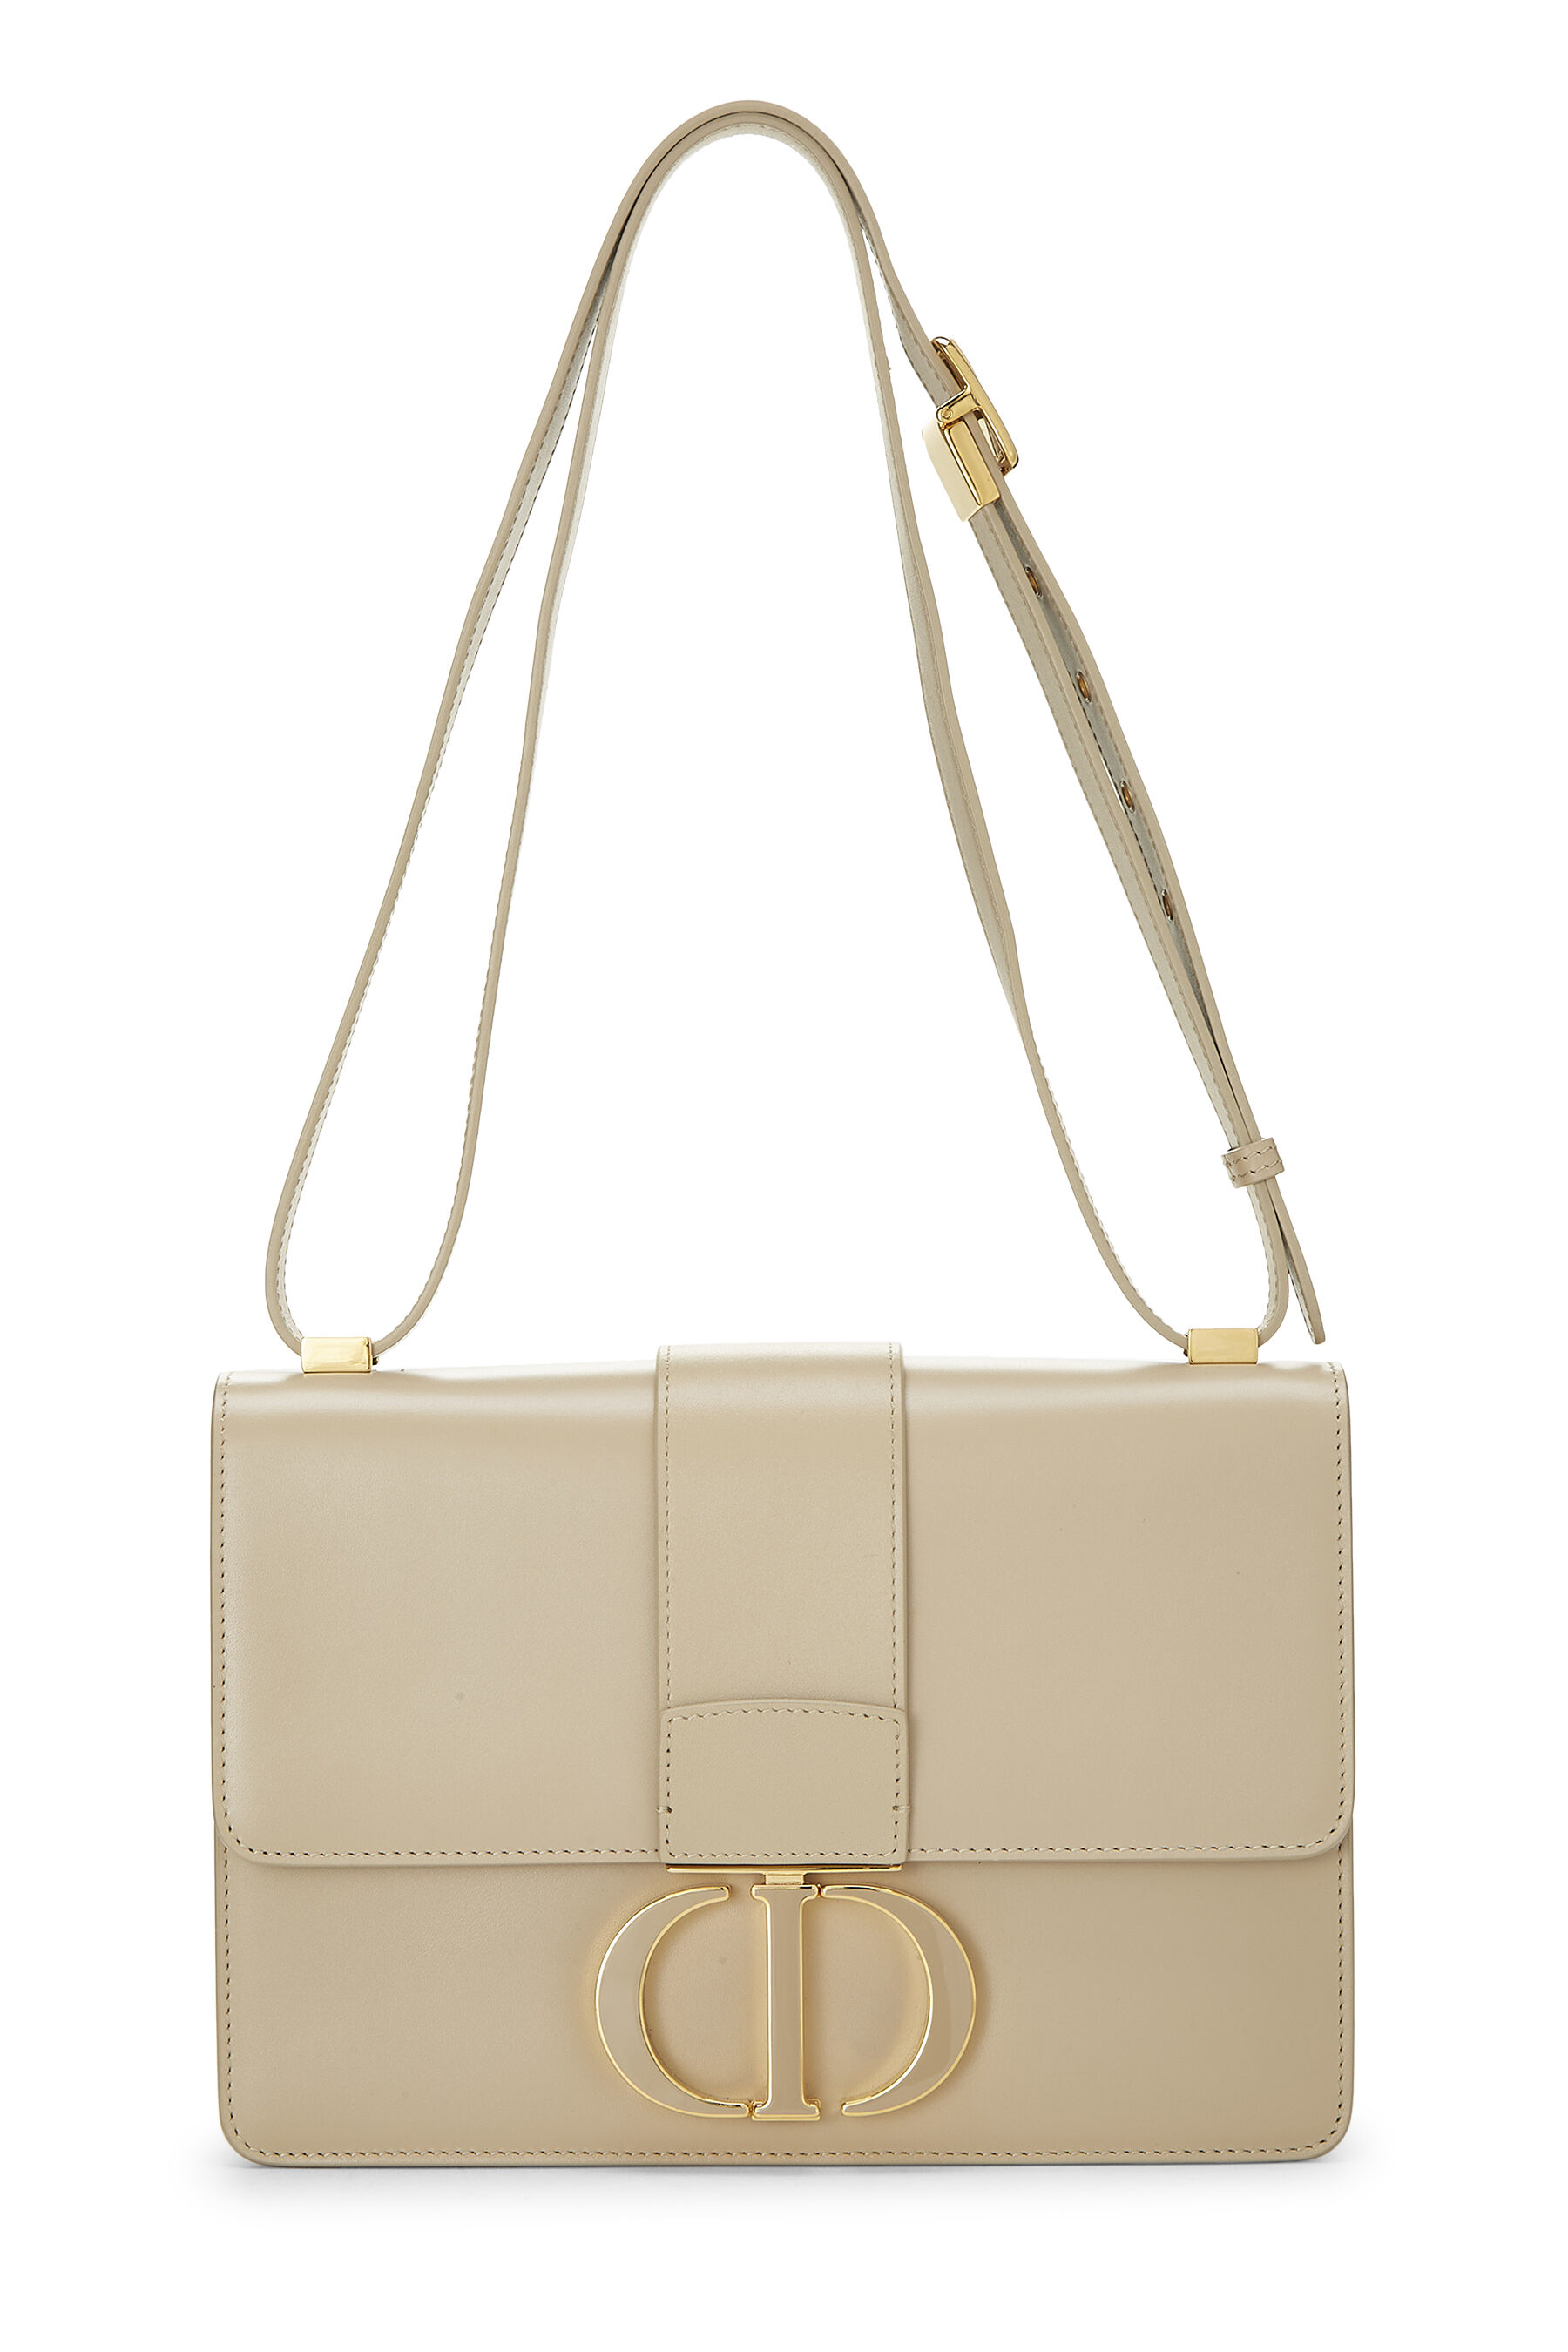 Christian Dior Beige Calfskin 30 Montaigne Shoulder Bag